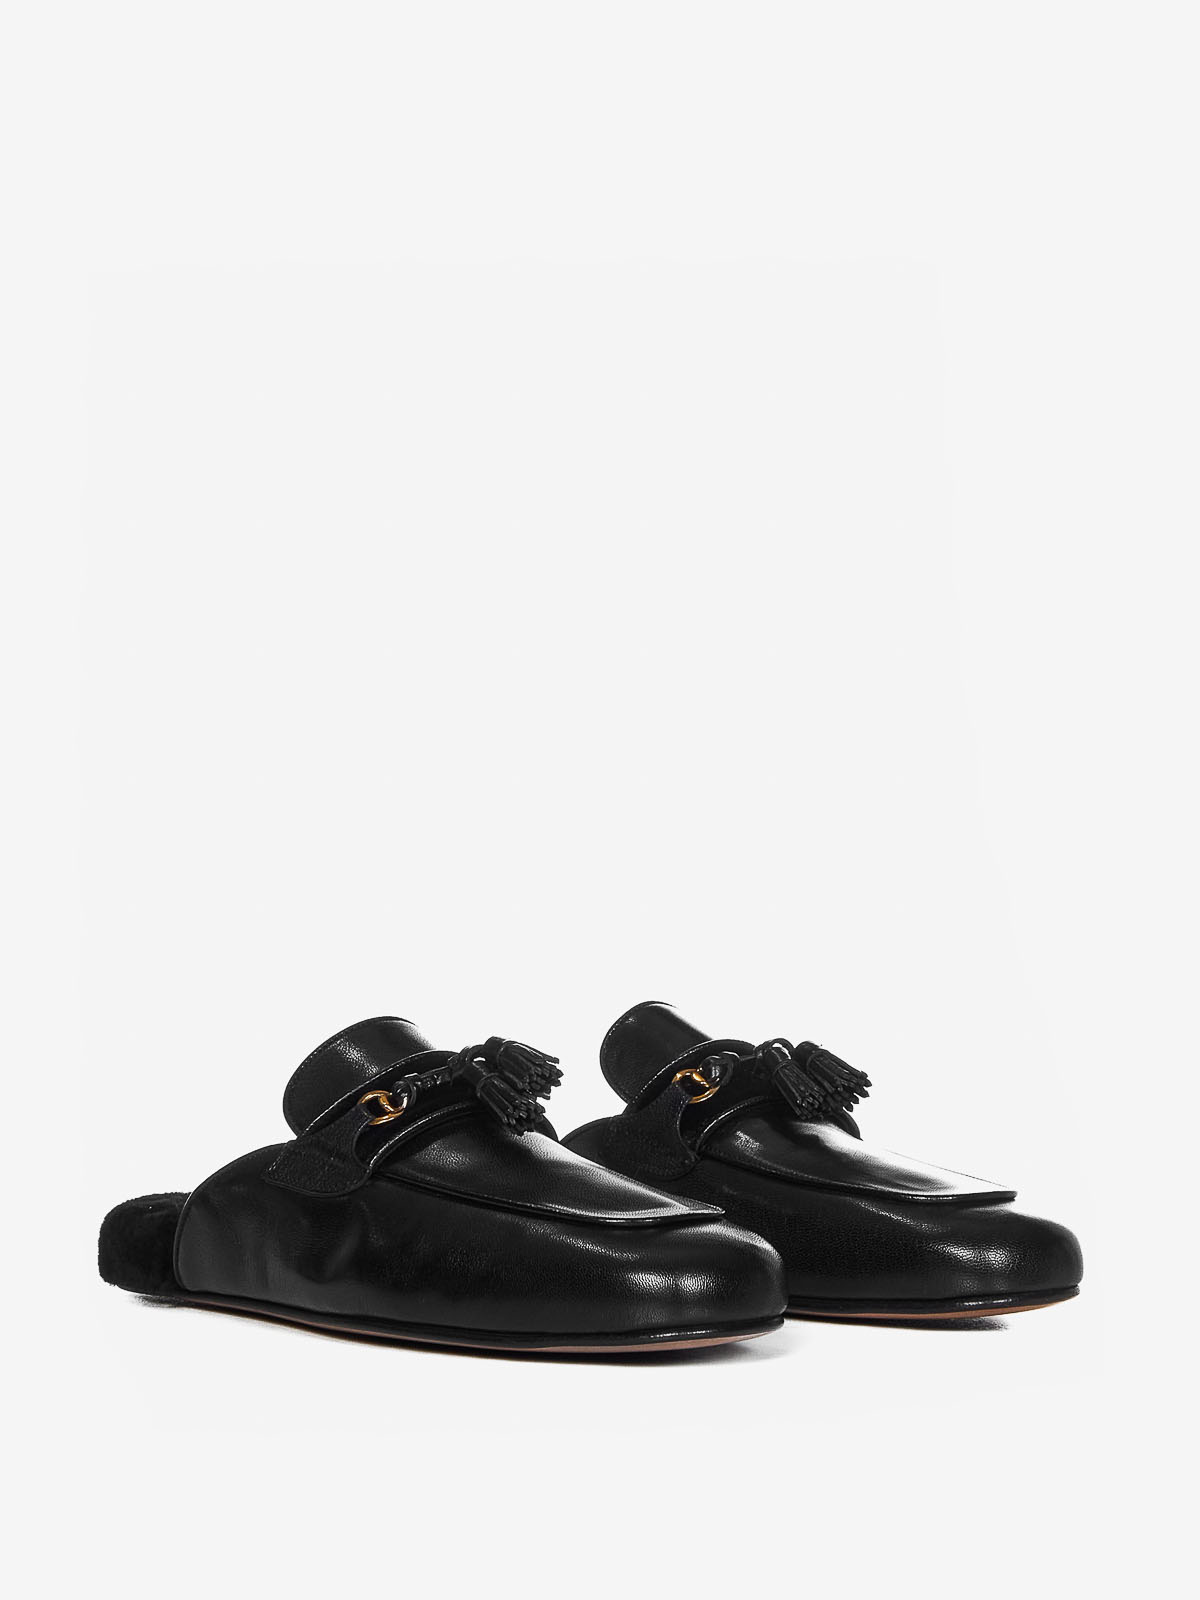 Buy Men's Black Leather Slip on Gold Buckle Dress Shoes Online in